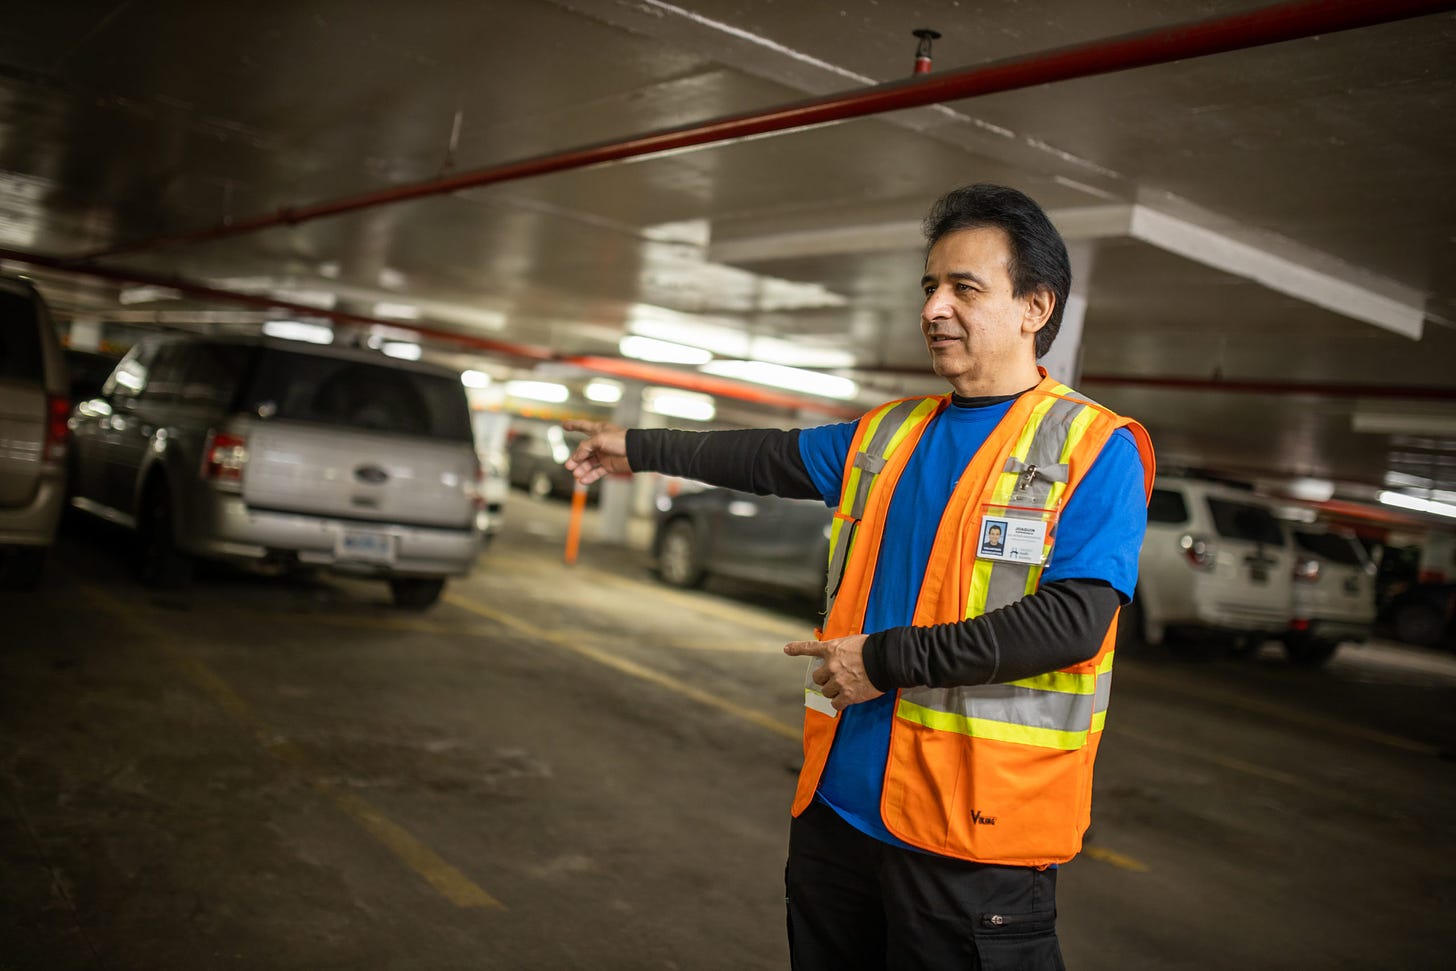 Introducing… a parking lot attendant - Hamilton Health Sciences